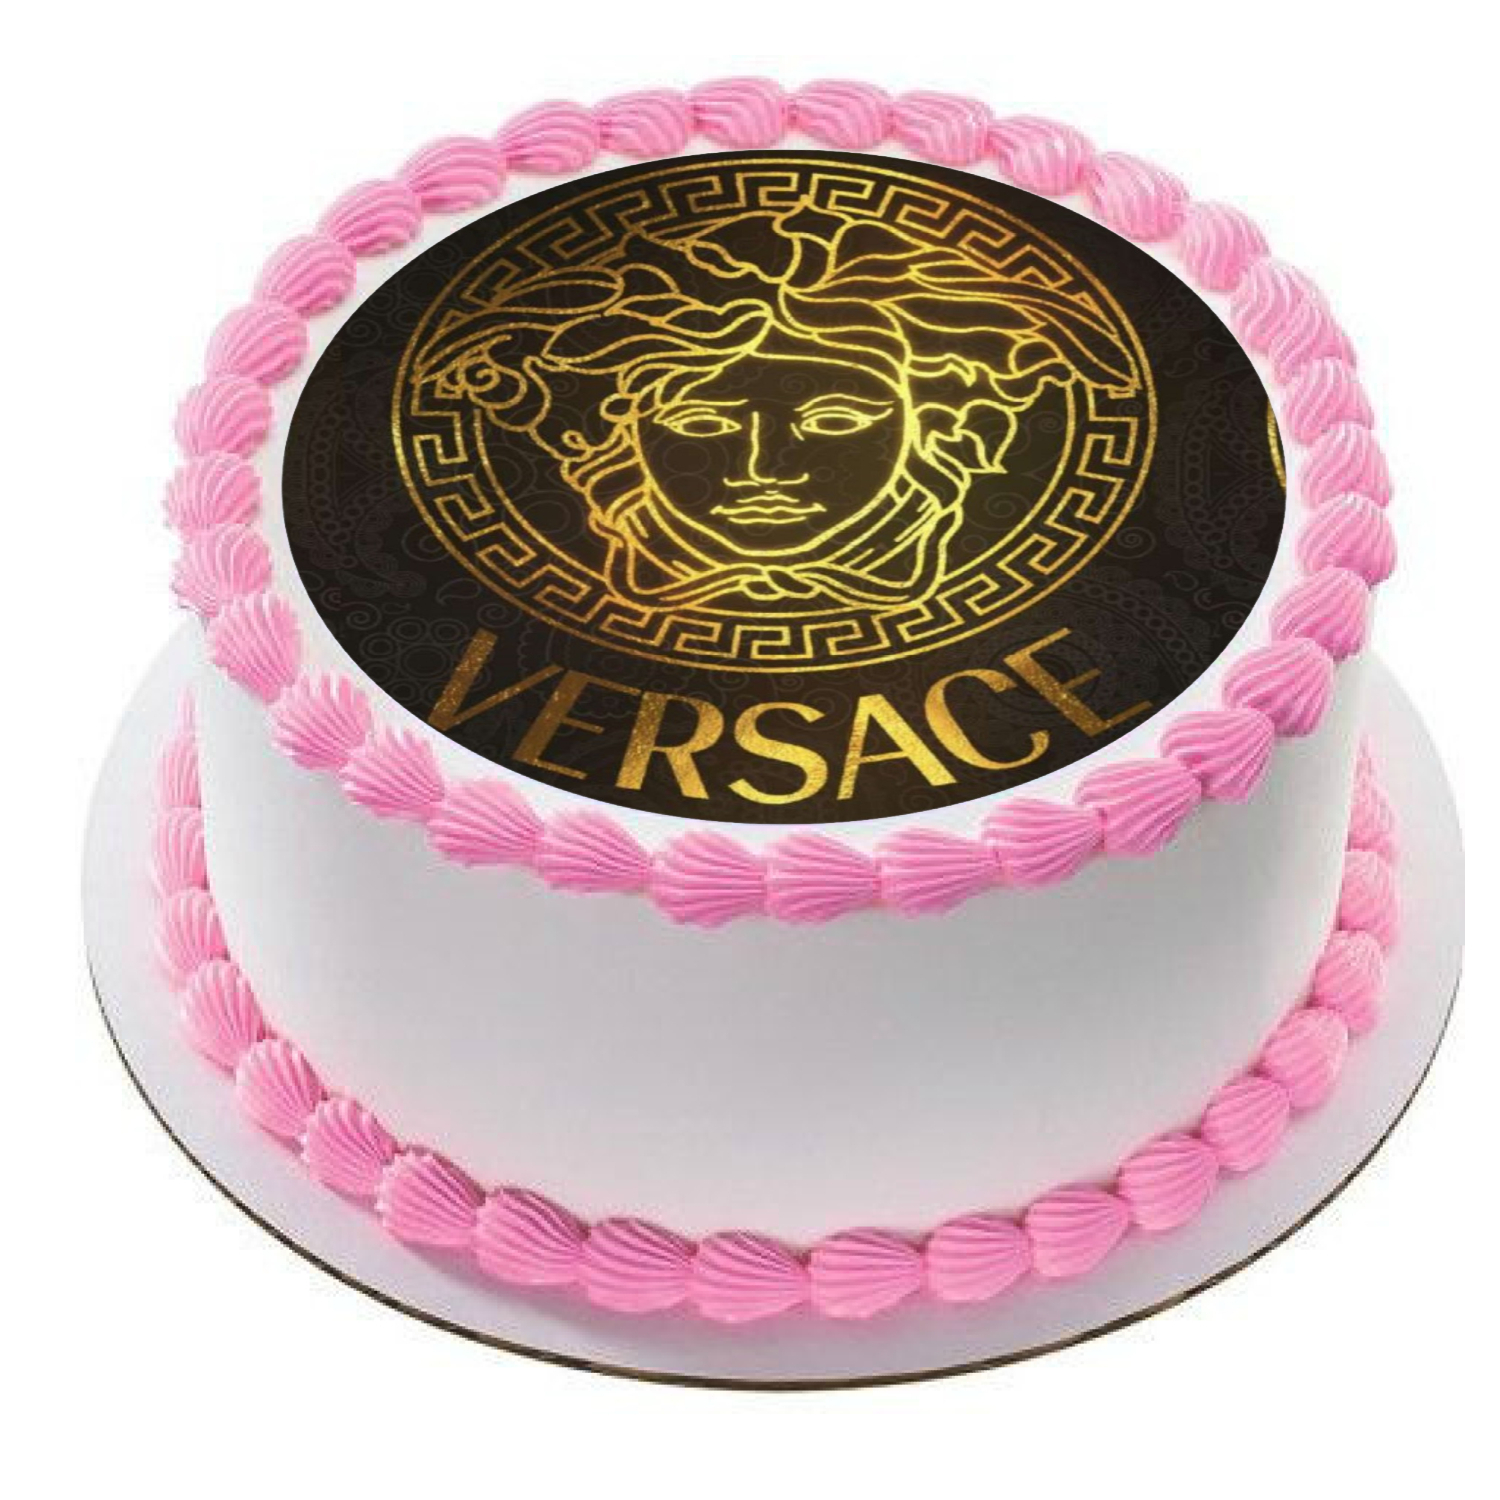 Versace cake - Decorated Cake by Le dolci creazioni di - CakesDecor